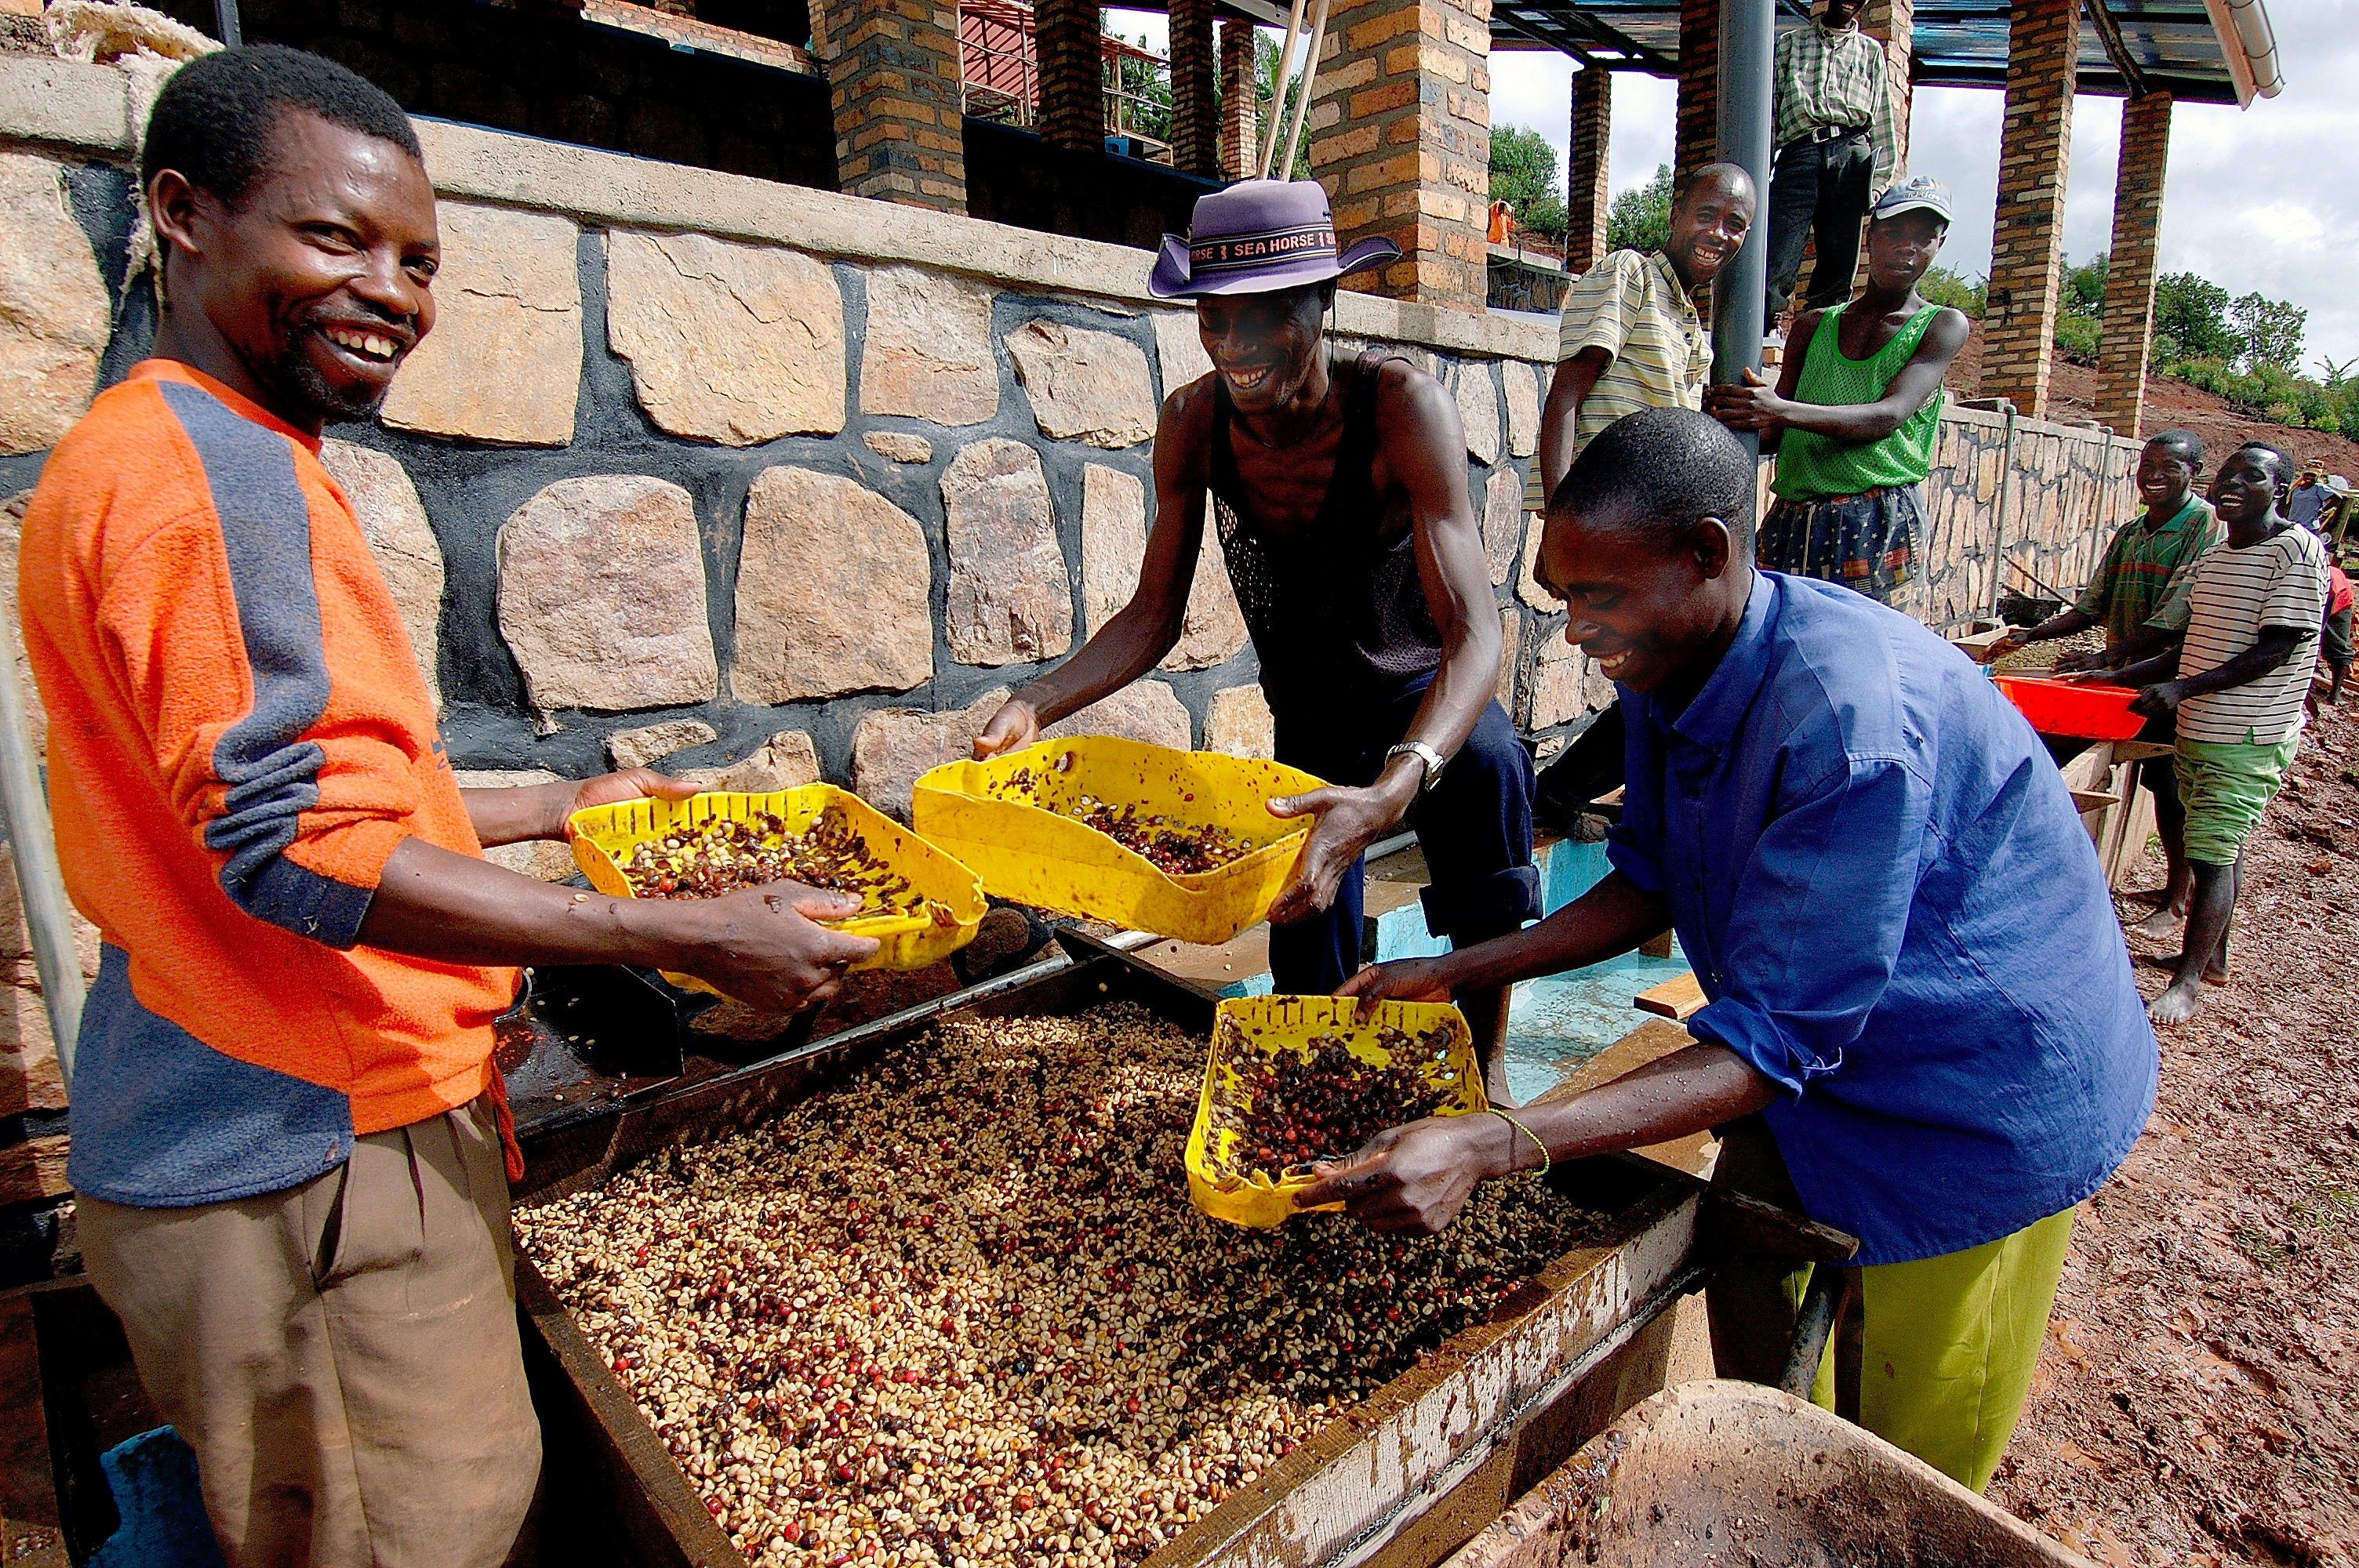 Processing coffee at Maraba Cooperative, Rwanda.